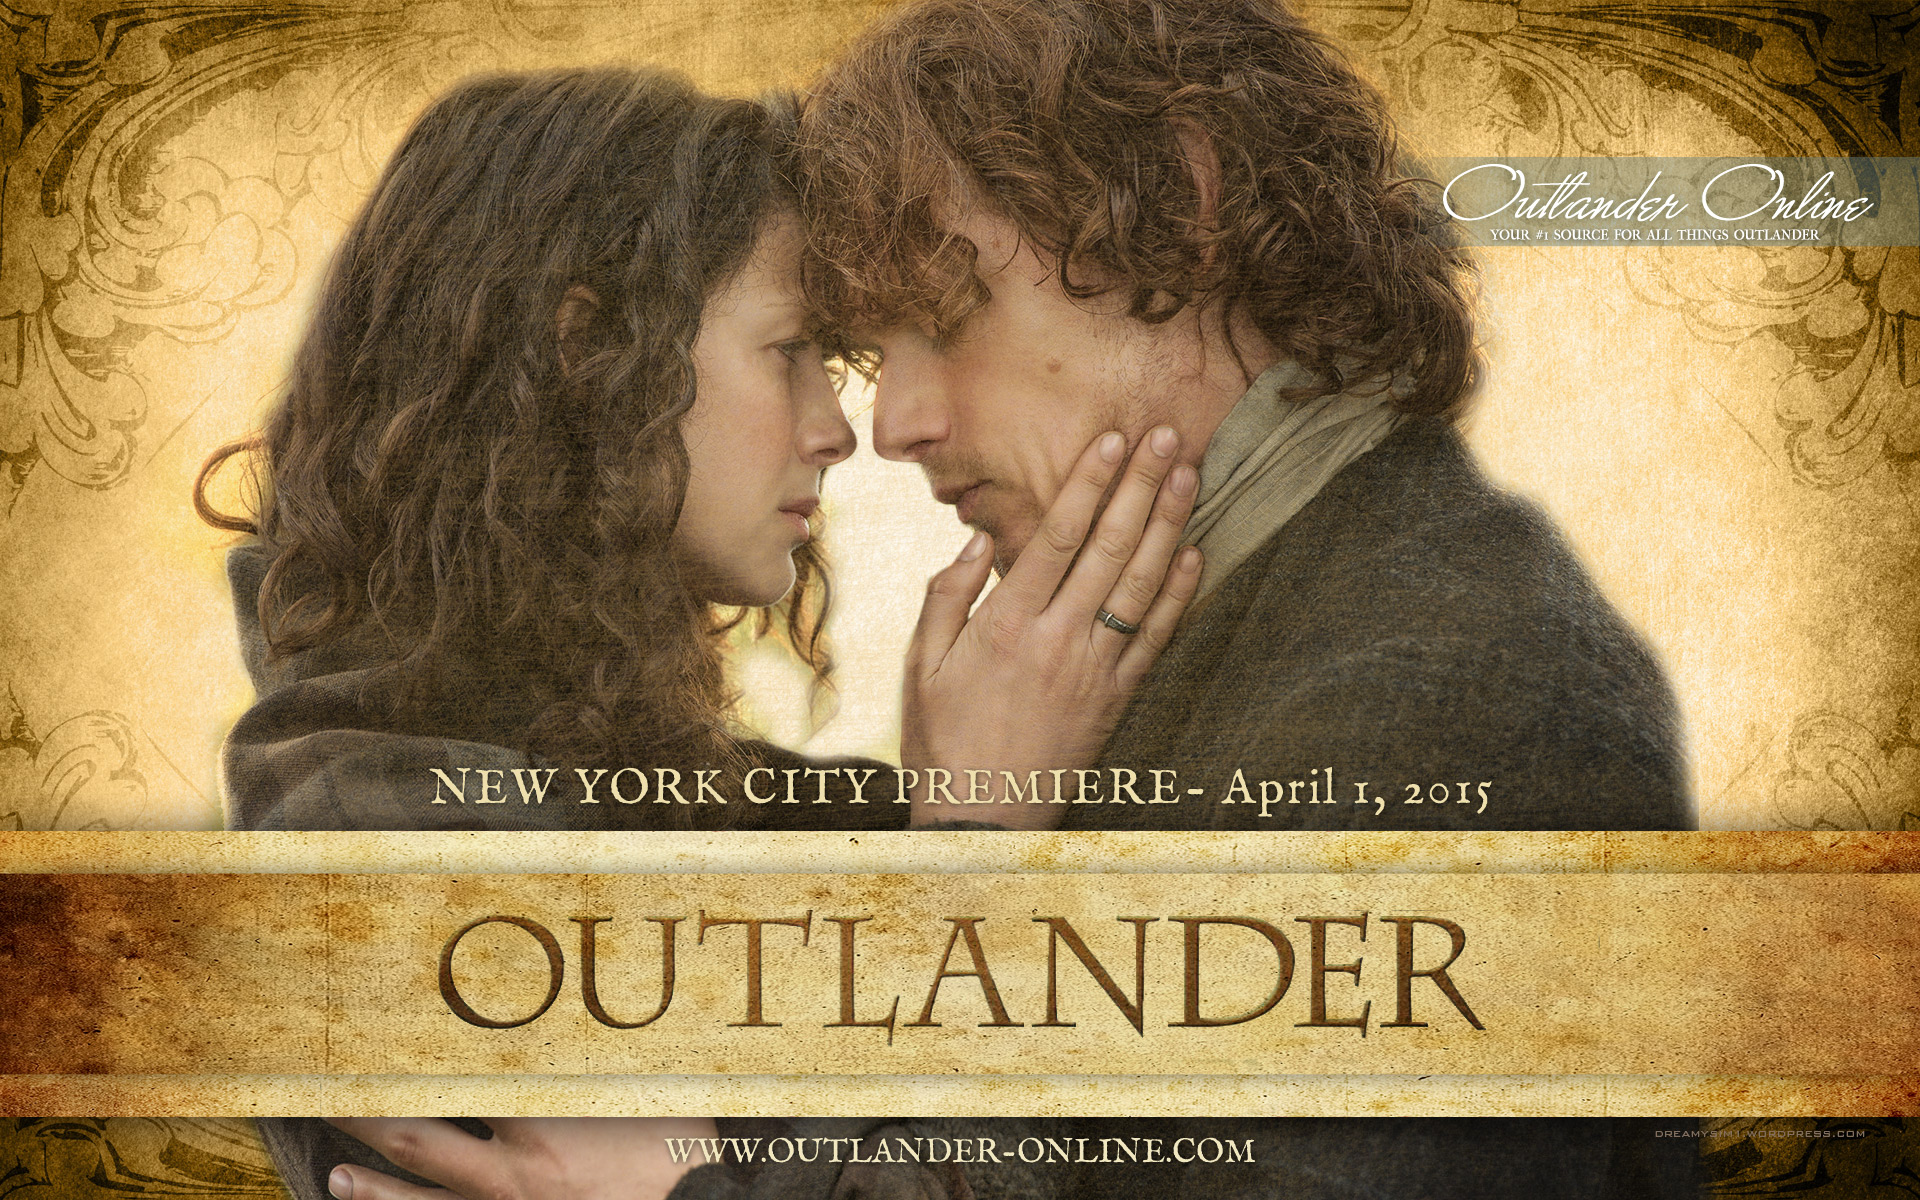 Outlander New York Premiere Poster In My Dreams Afalchi Free images wallpape [afalchi.blogspot.com]